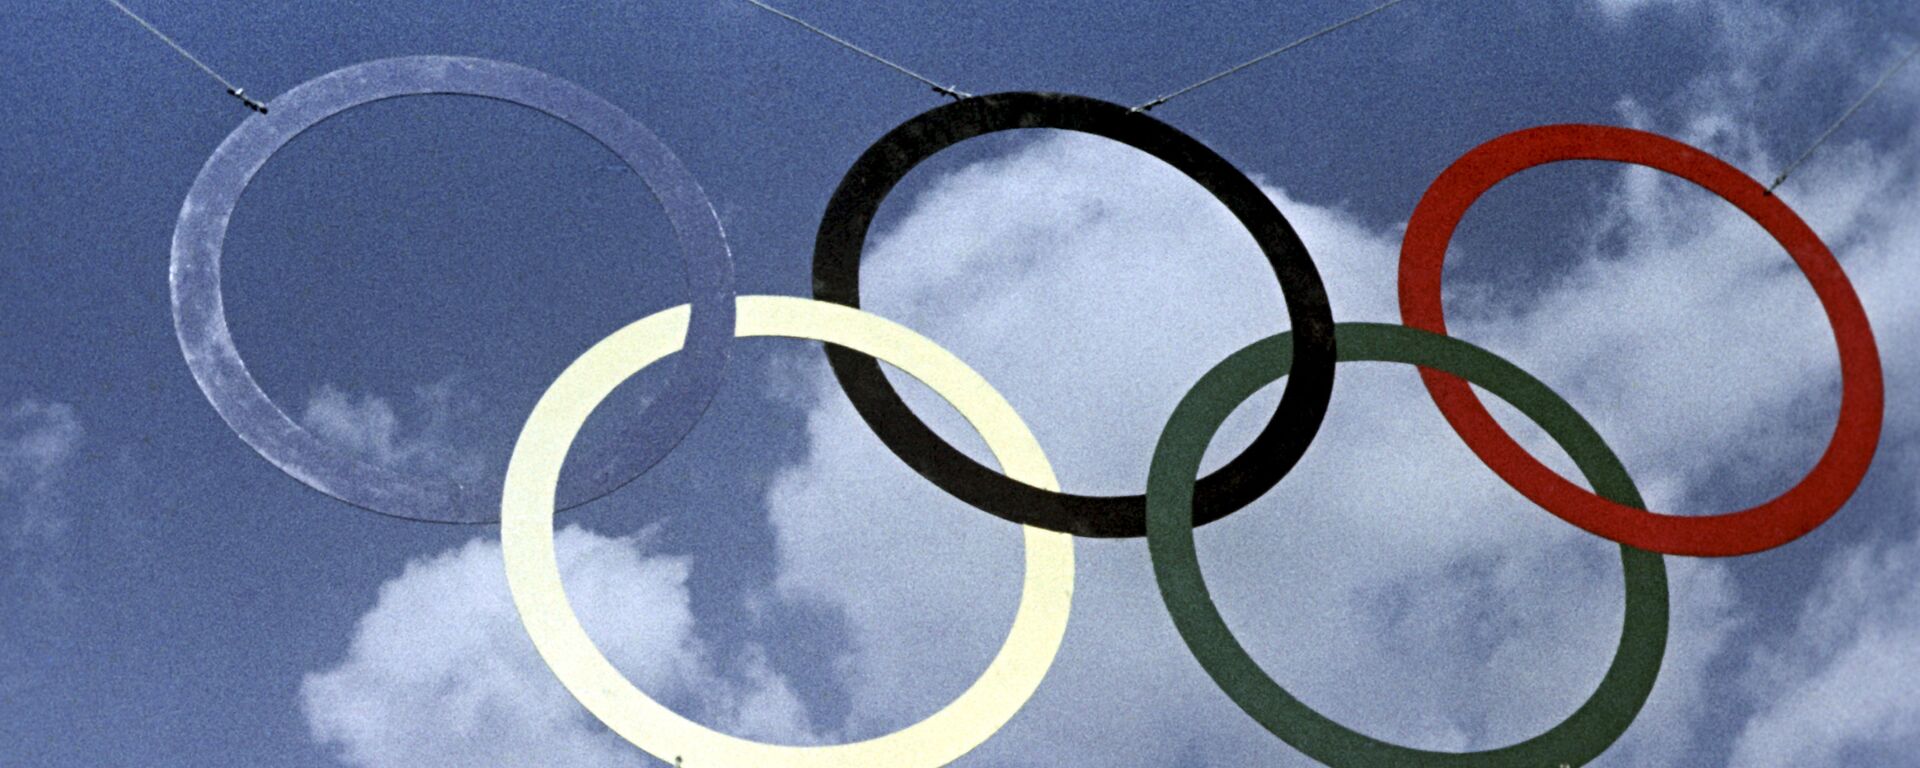 Олимпийские кольца - Sputnik Латвия, 1920, 04.07.2020